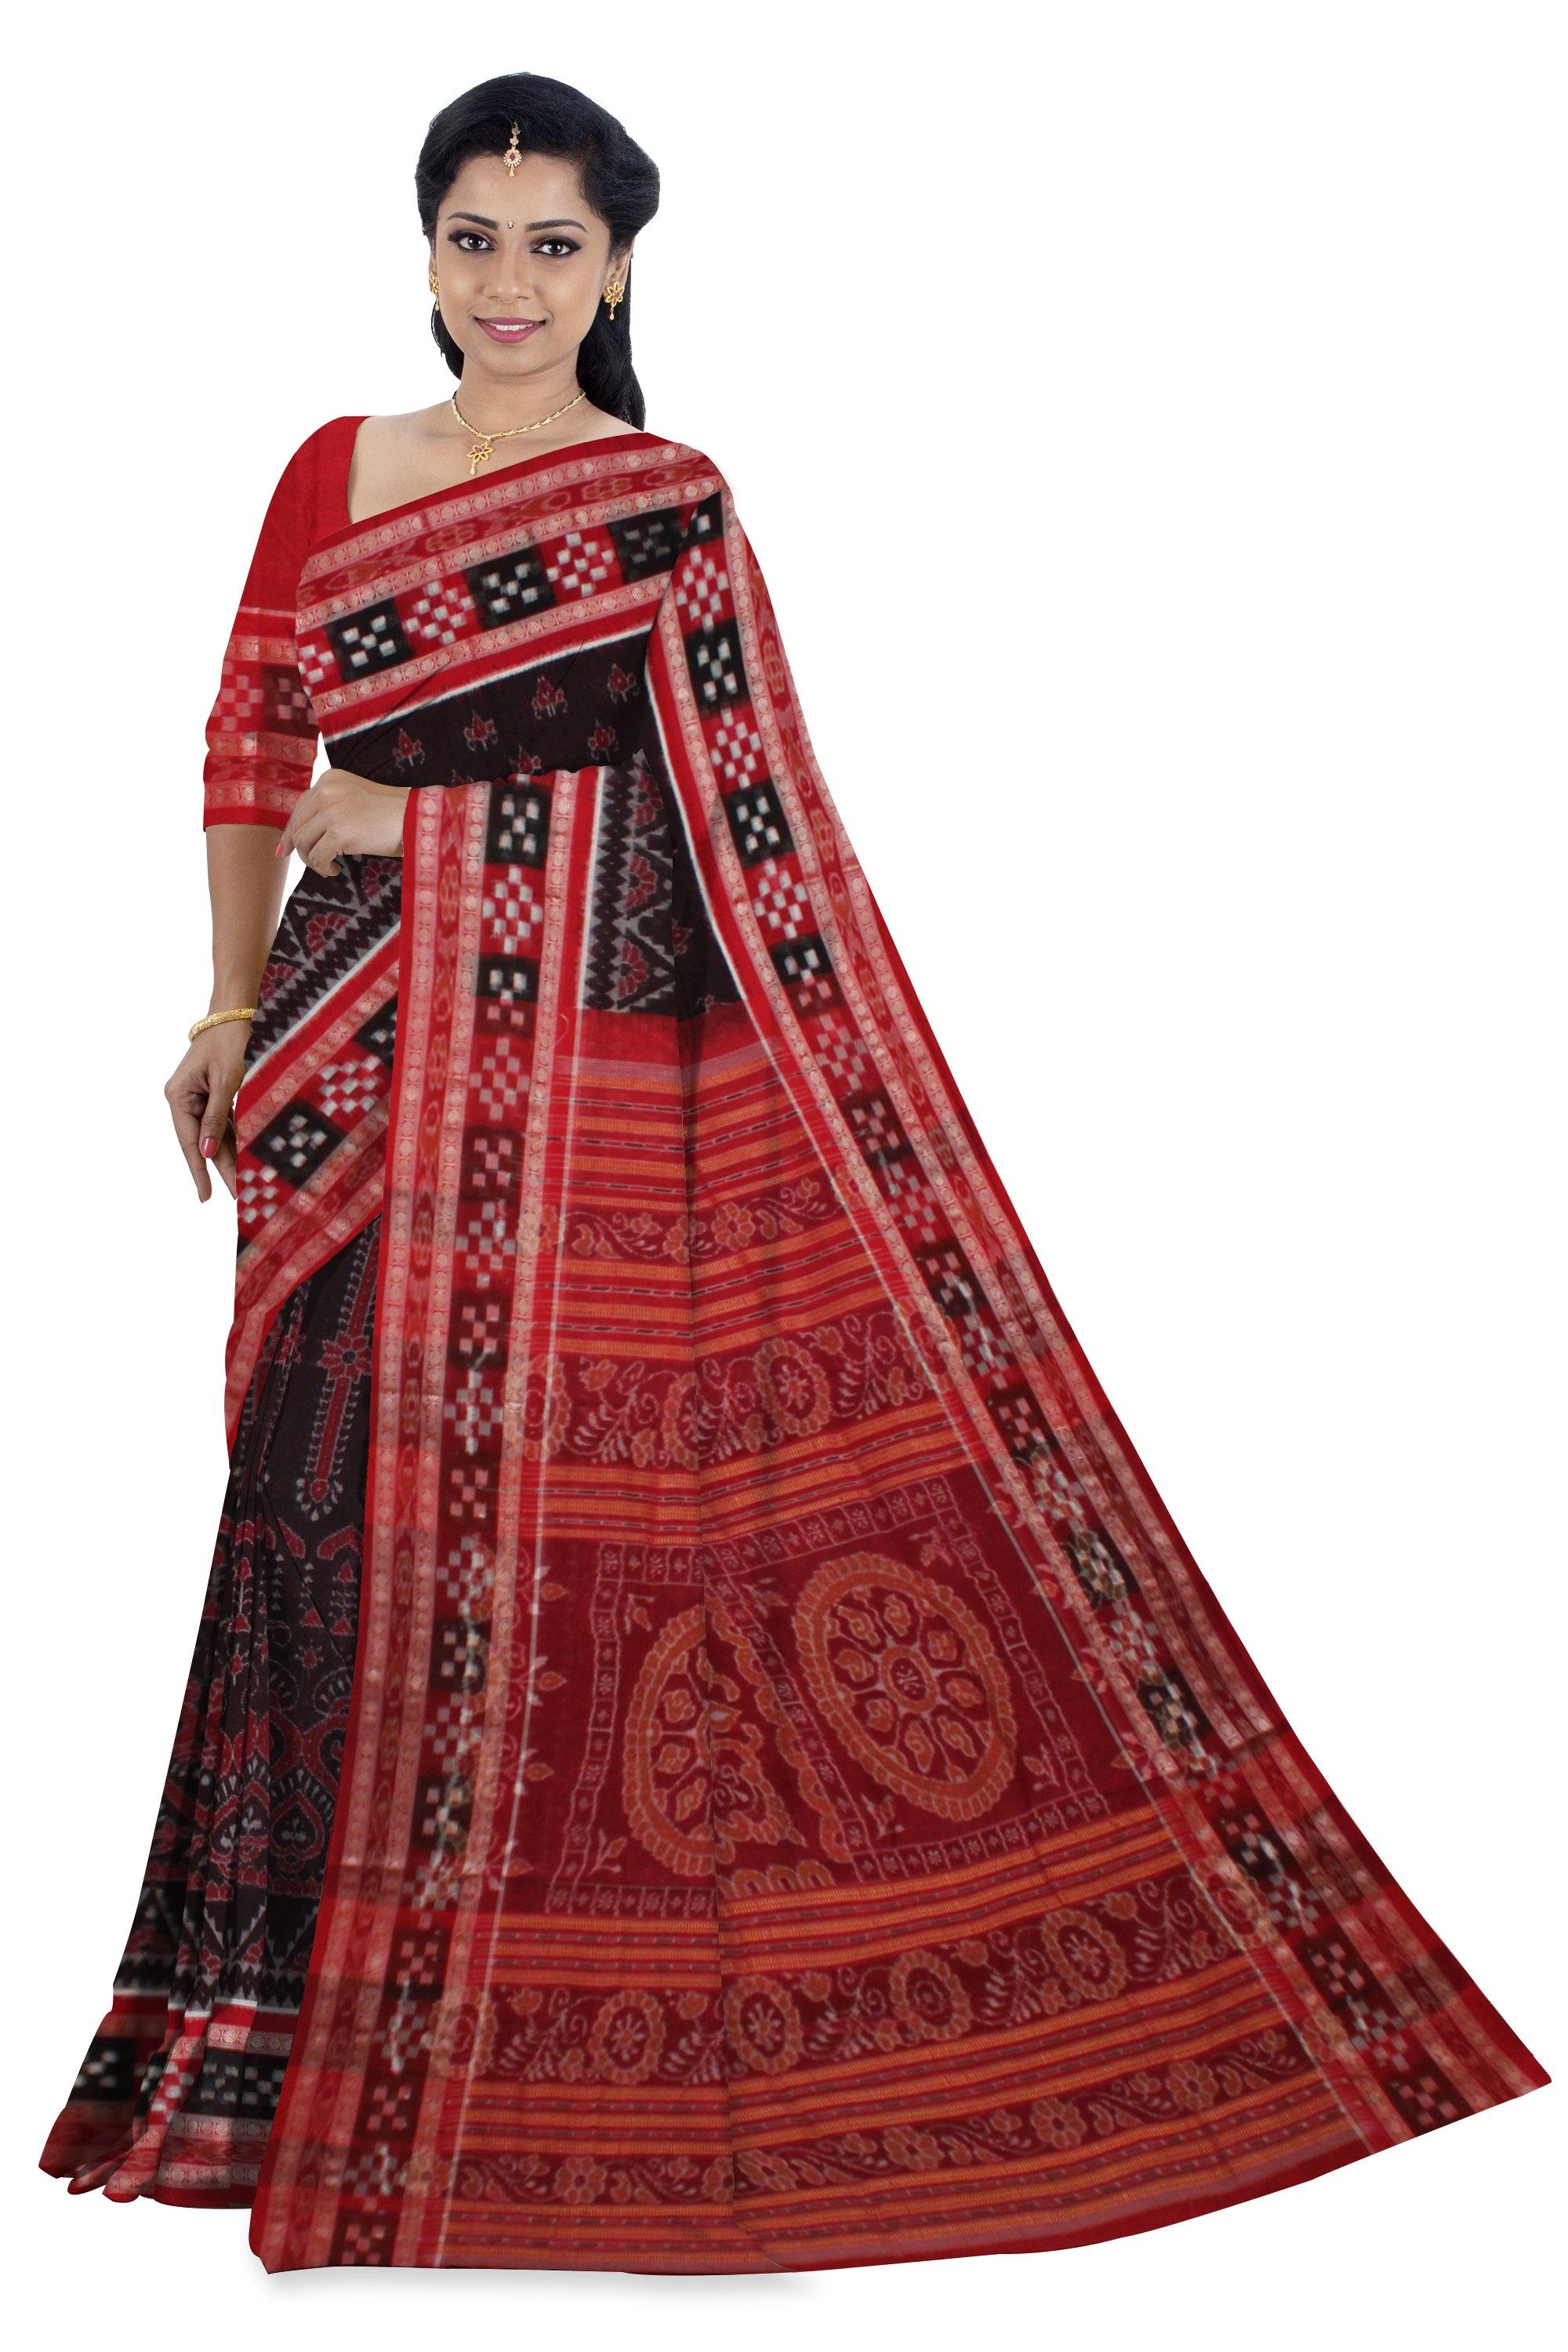 Exclusive Sambalpuri IKAT cotton Saree with sapta border in Brown color with Blouse piece - Koshali Arts & Crafts Enterprise